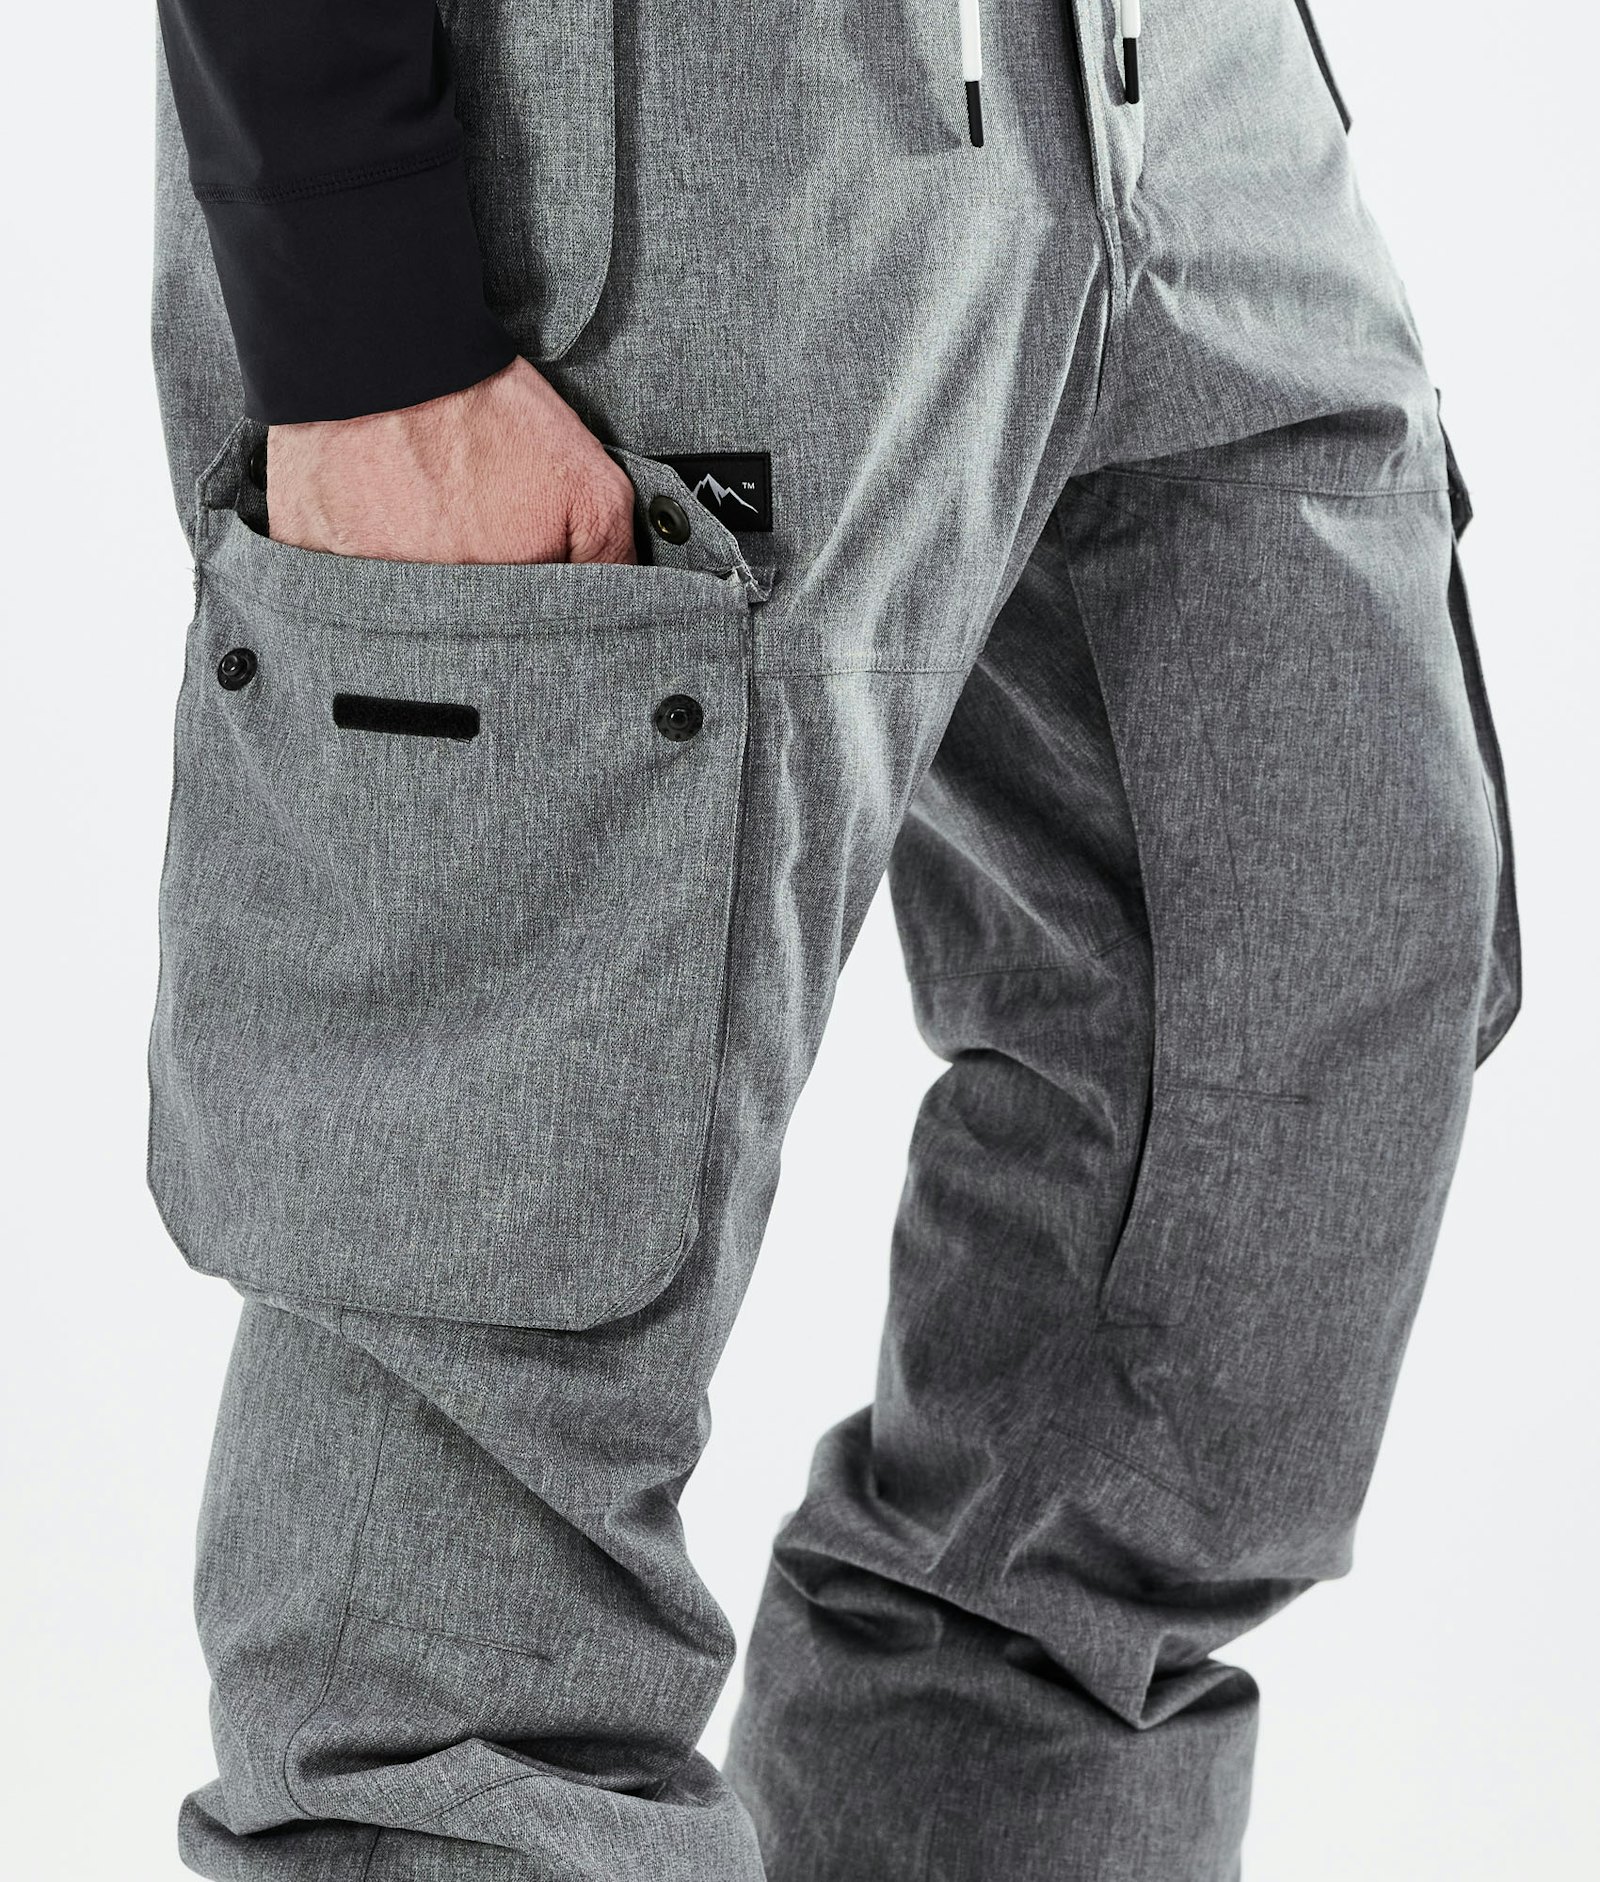 Iconic 2020 Pantalones Snowboard Hombre Grey Melange